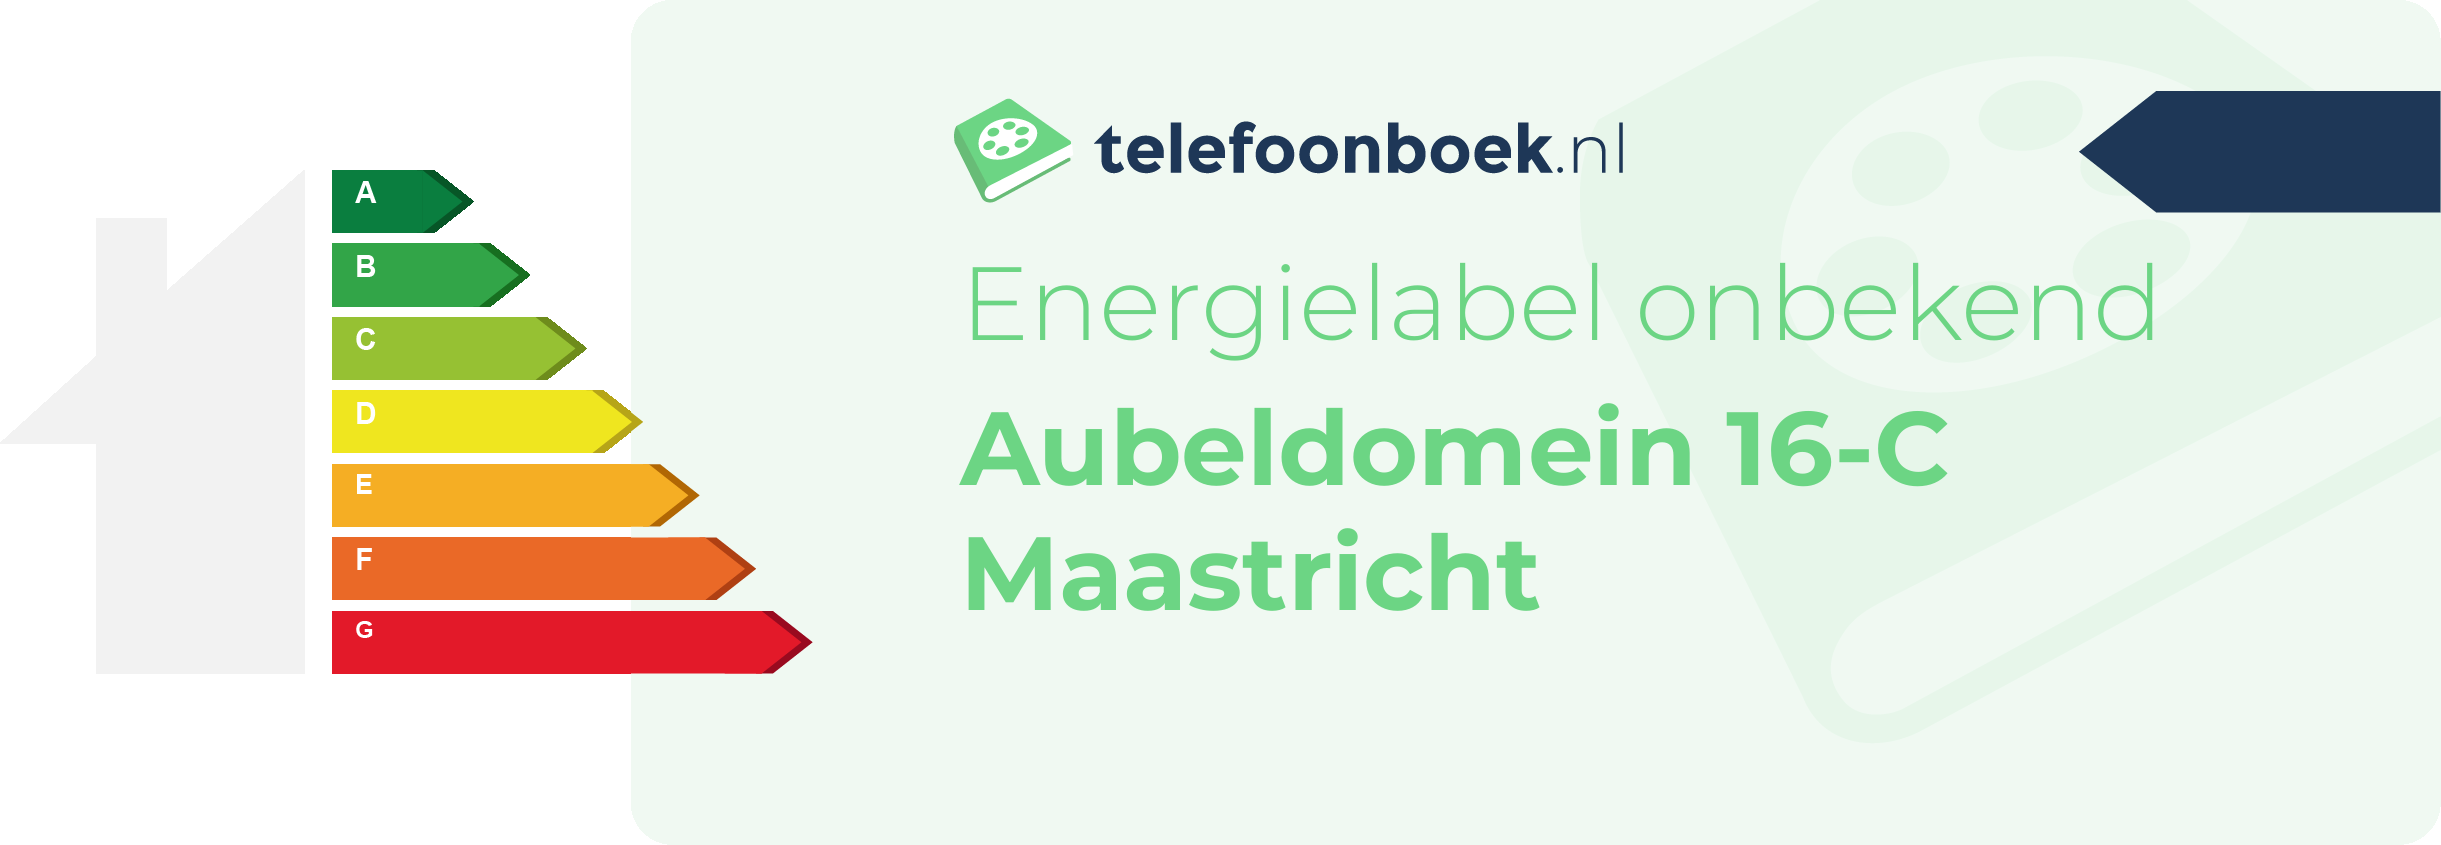 Energielabel Aubeldomein 16-C Maastricht